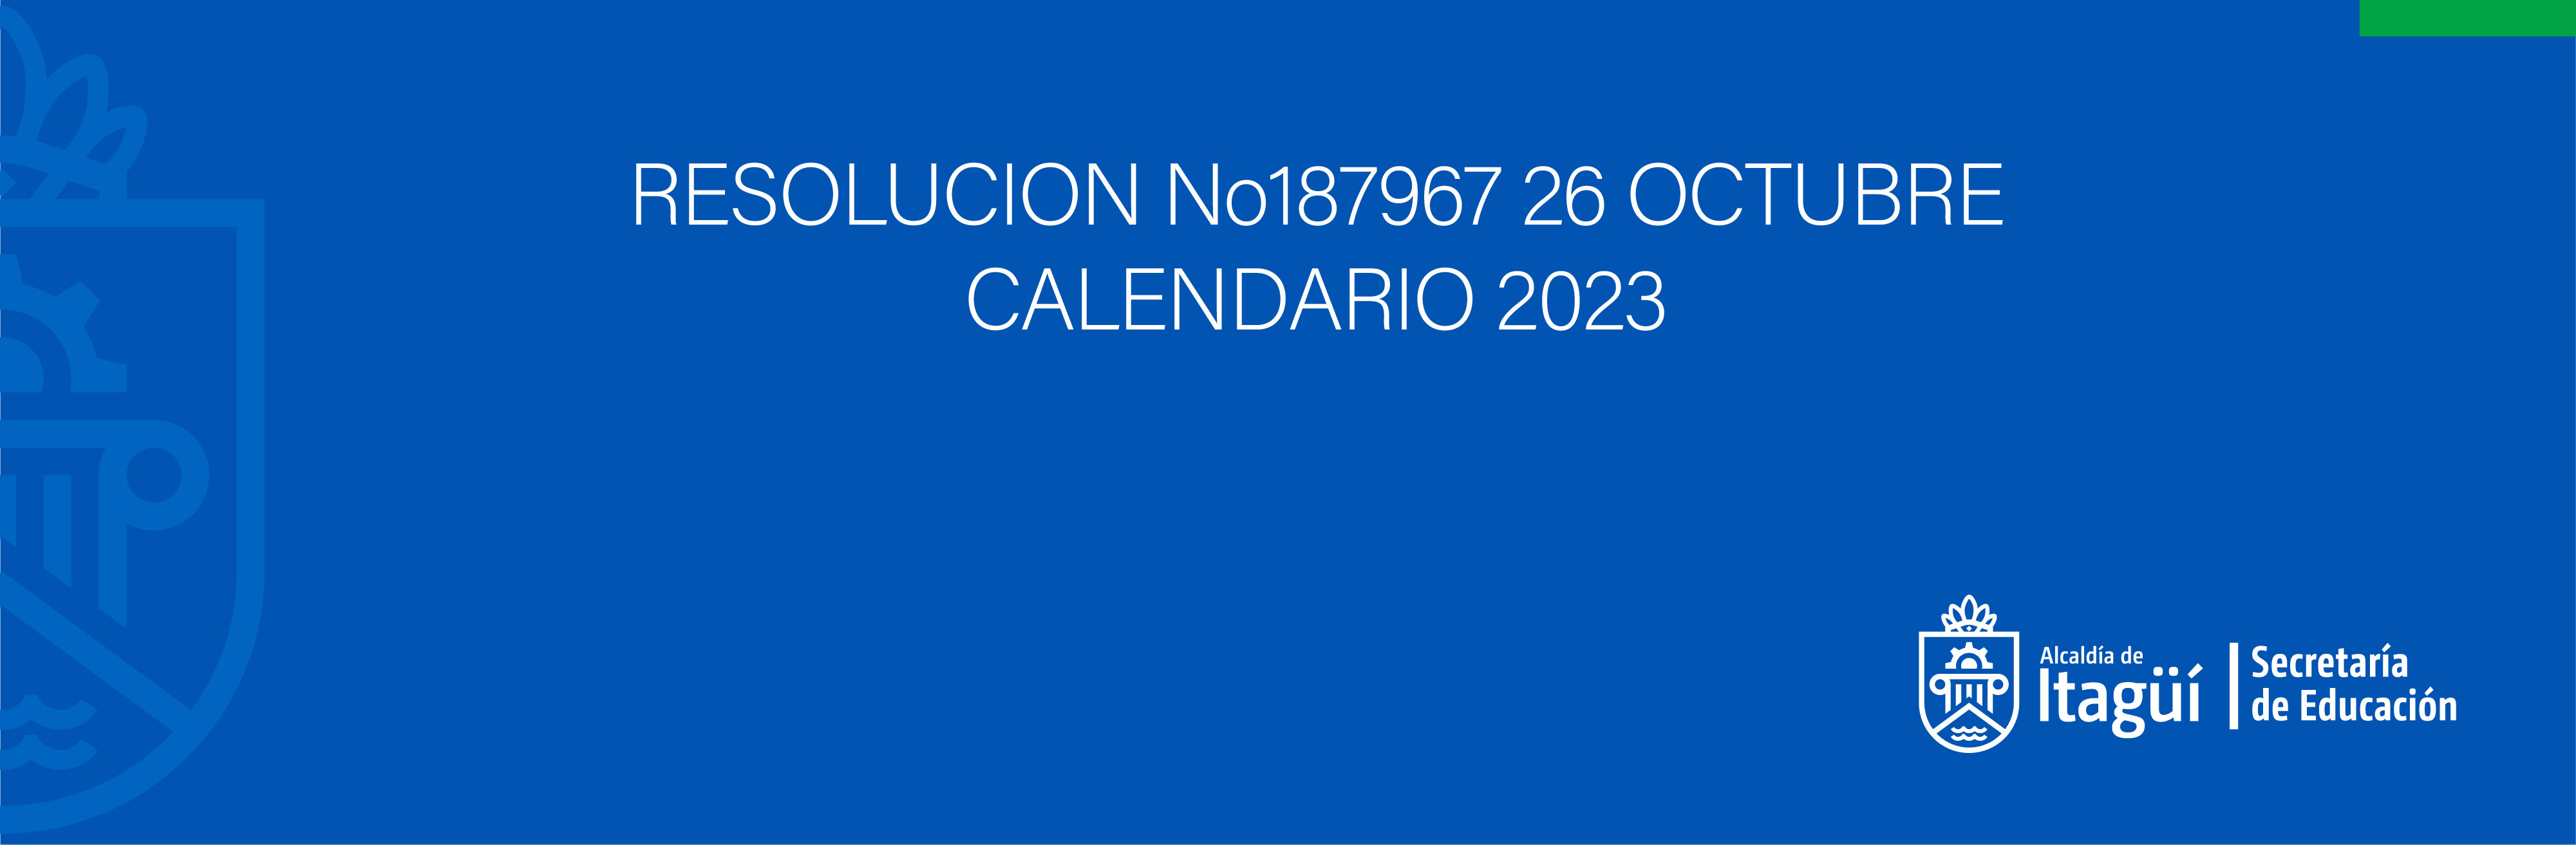 RESOLUCION No. 187967 26 OCTUBRE CALENDARIO 2023